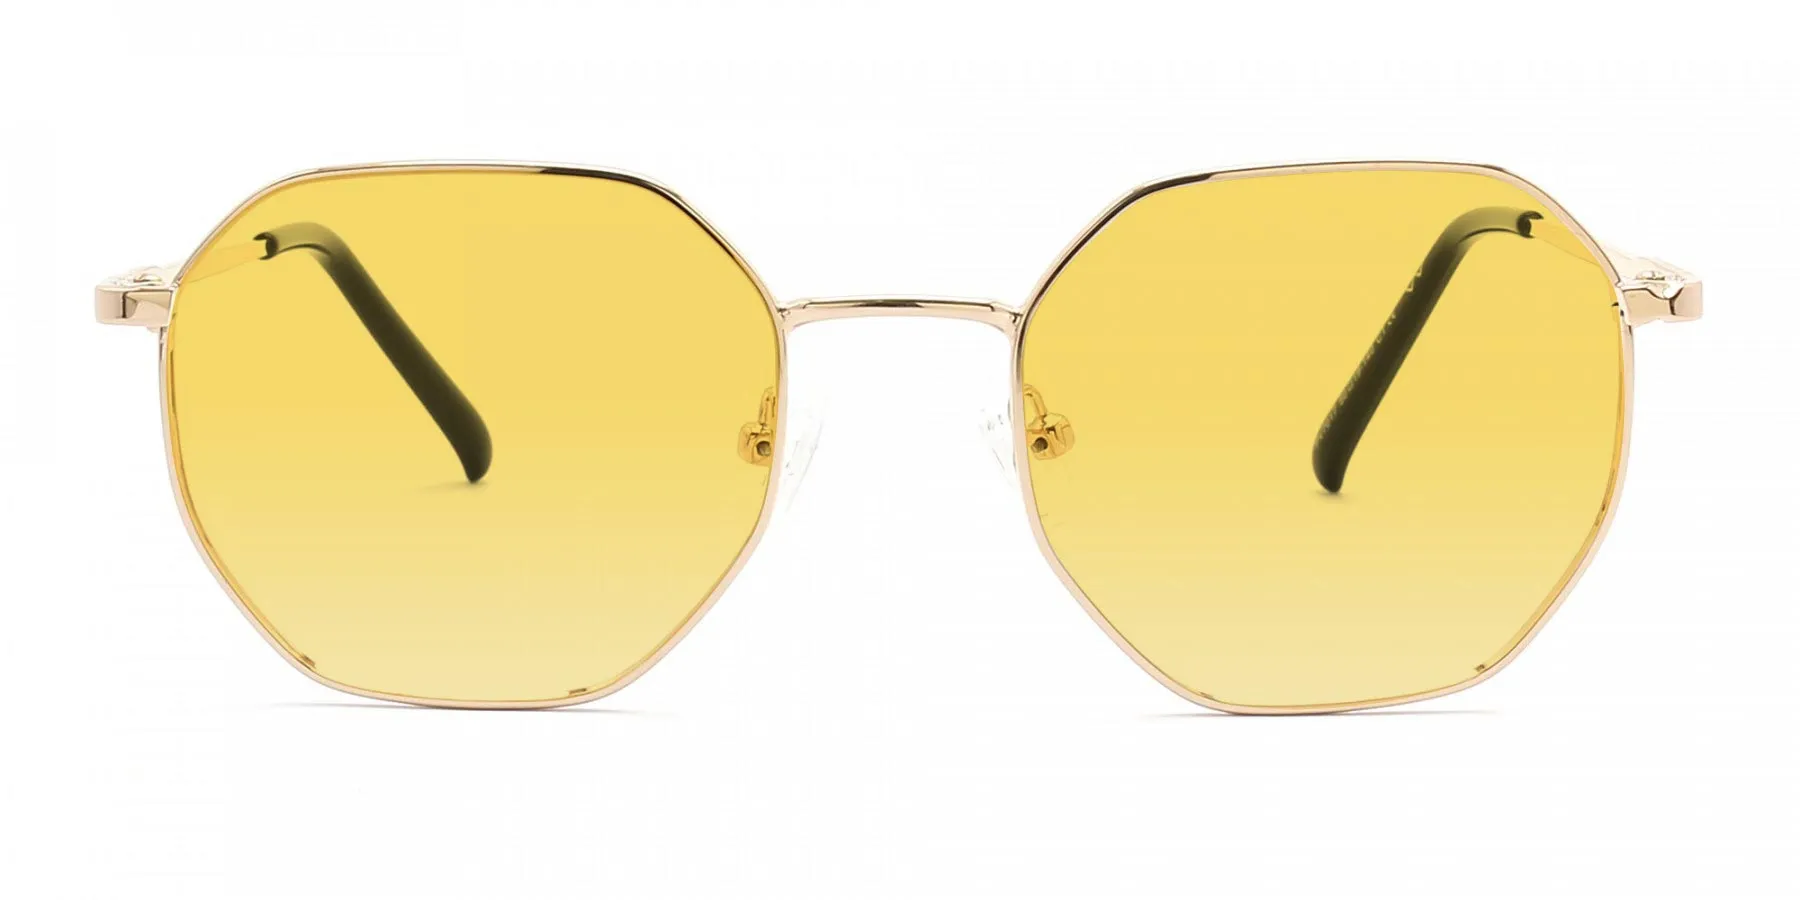 prescription glasses yellow lenses-2